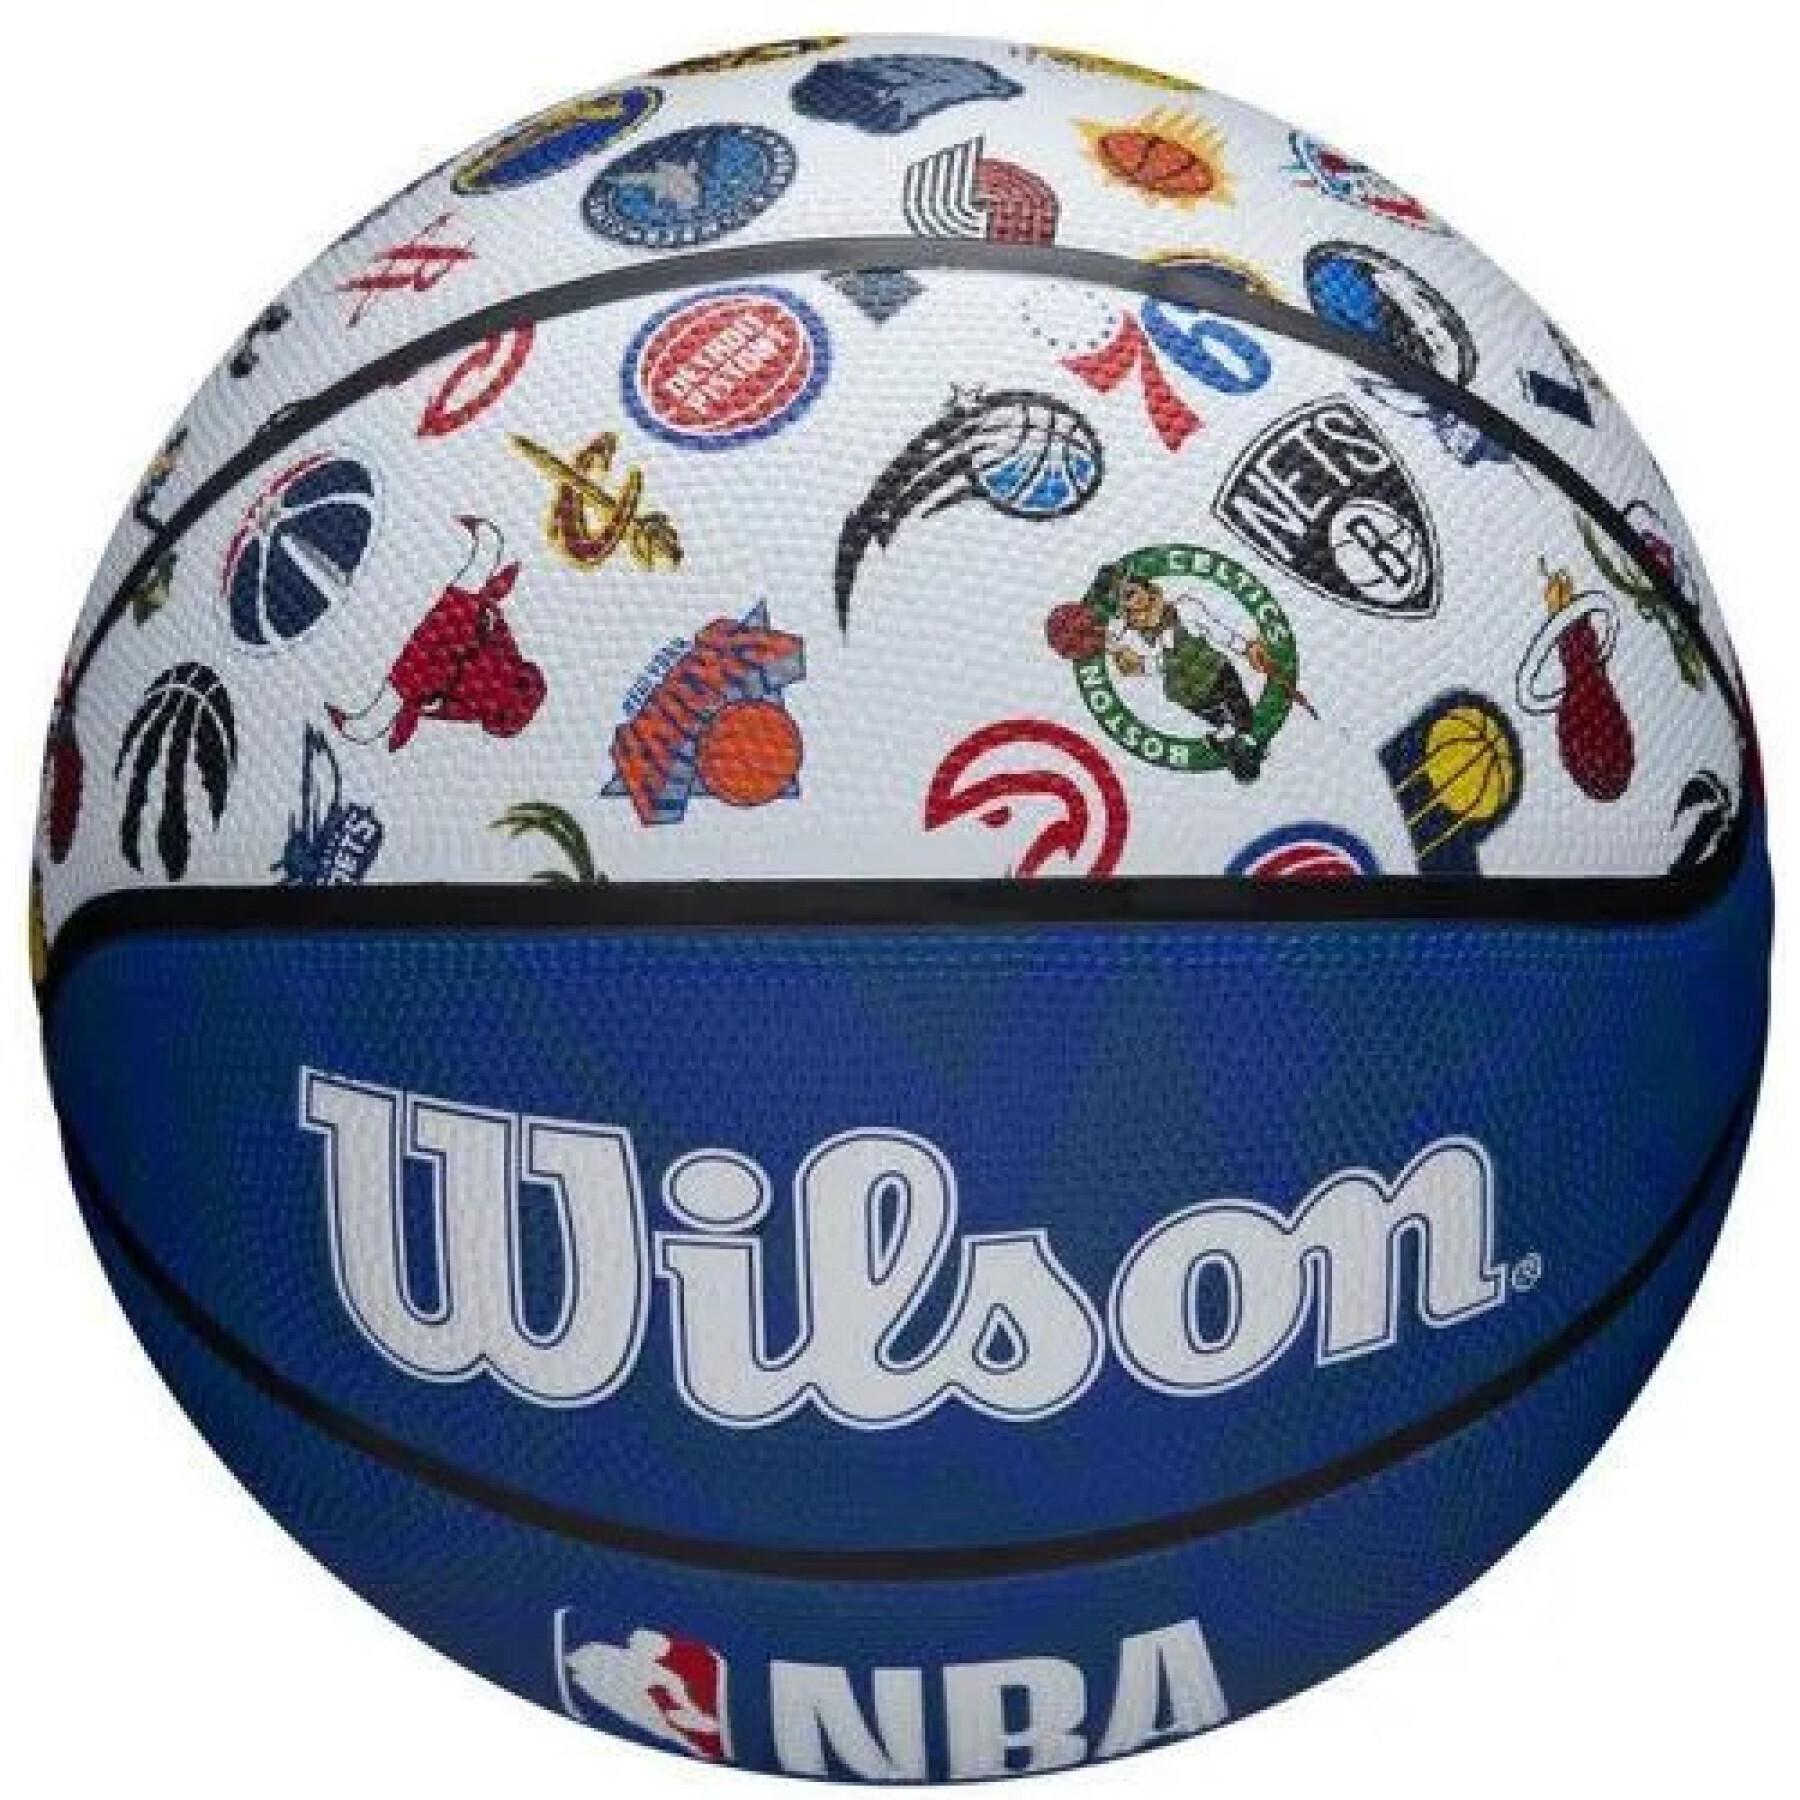 Piłka do koszykówki Wilson NBA All Team